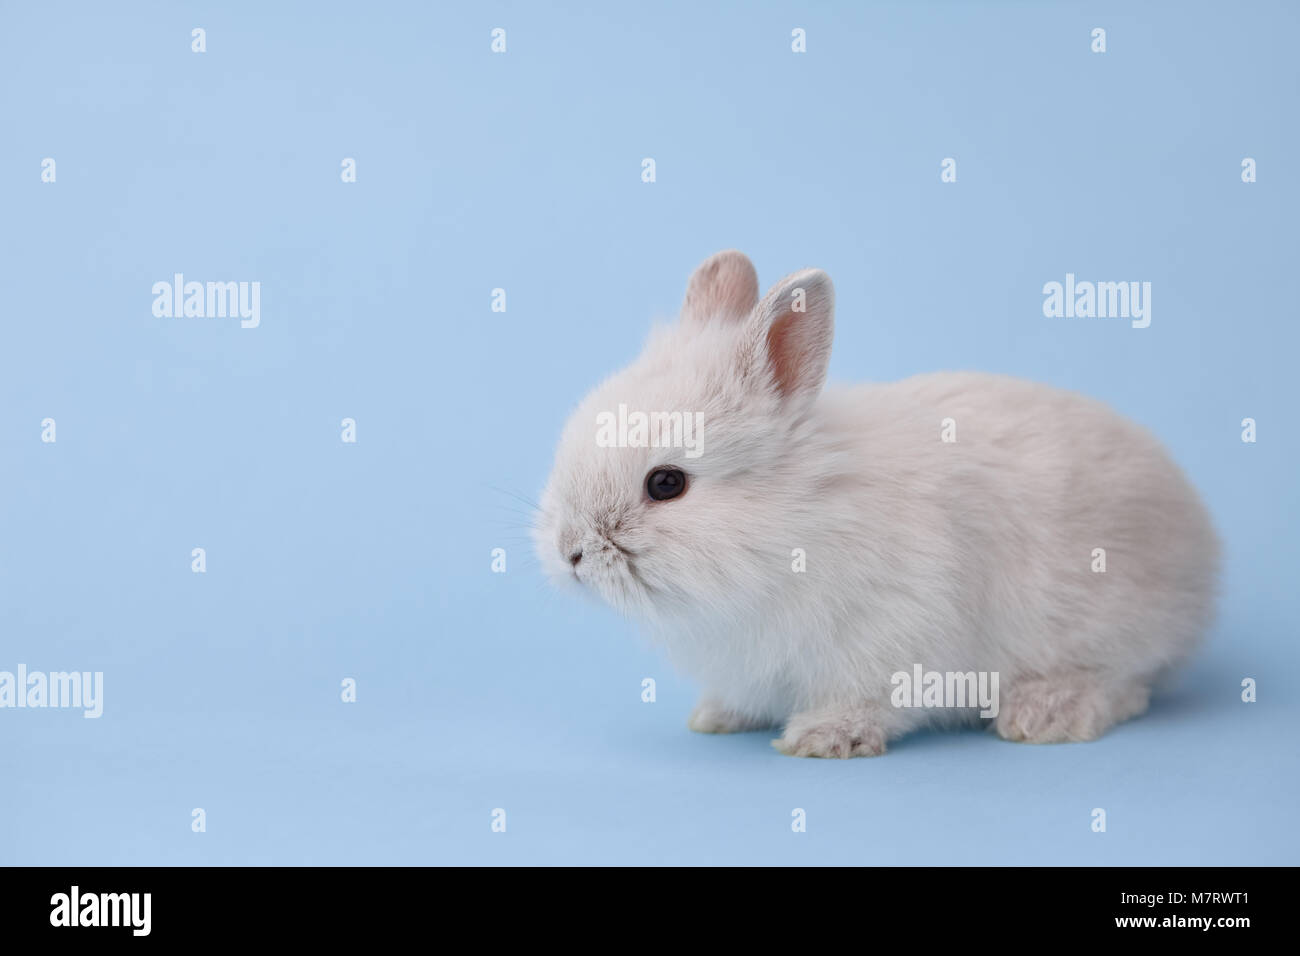 White bunny rabbit on blue background Stock Photo